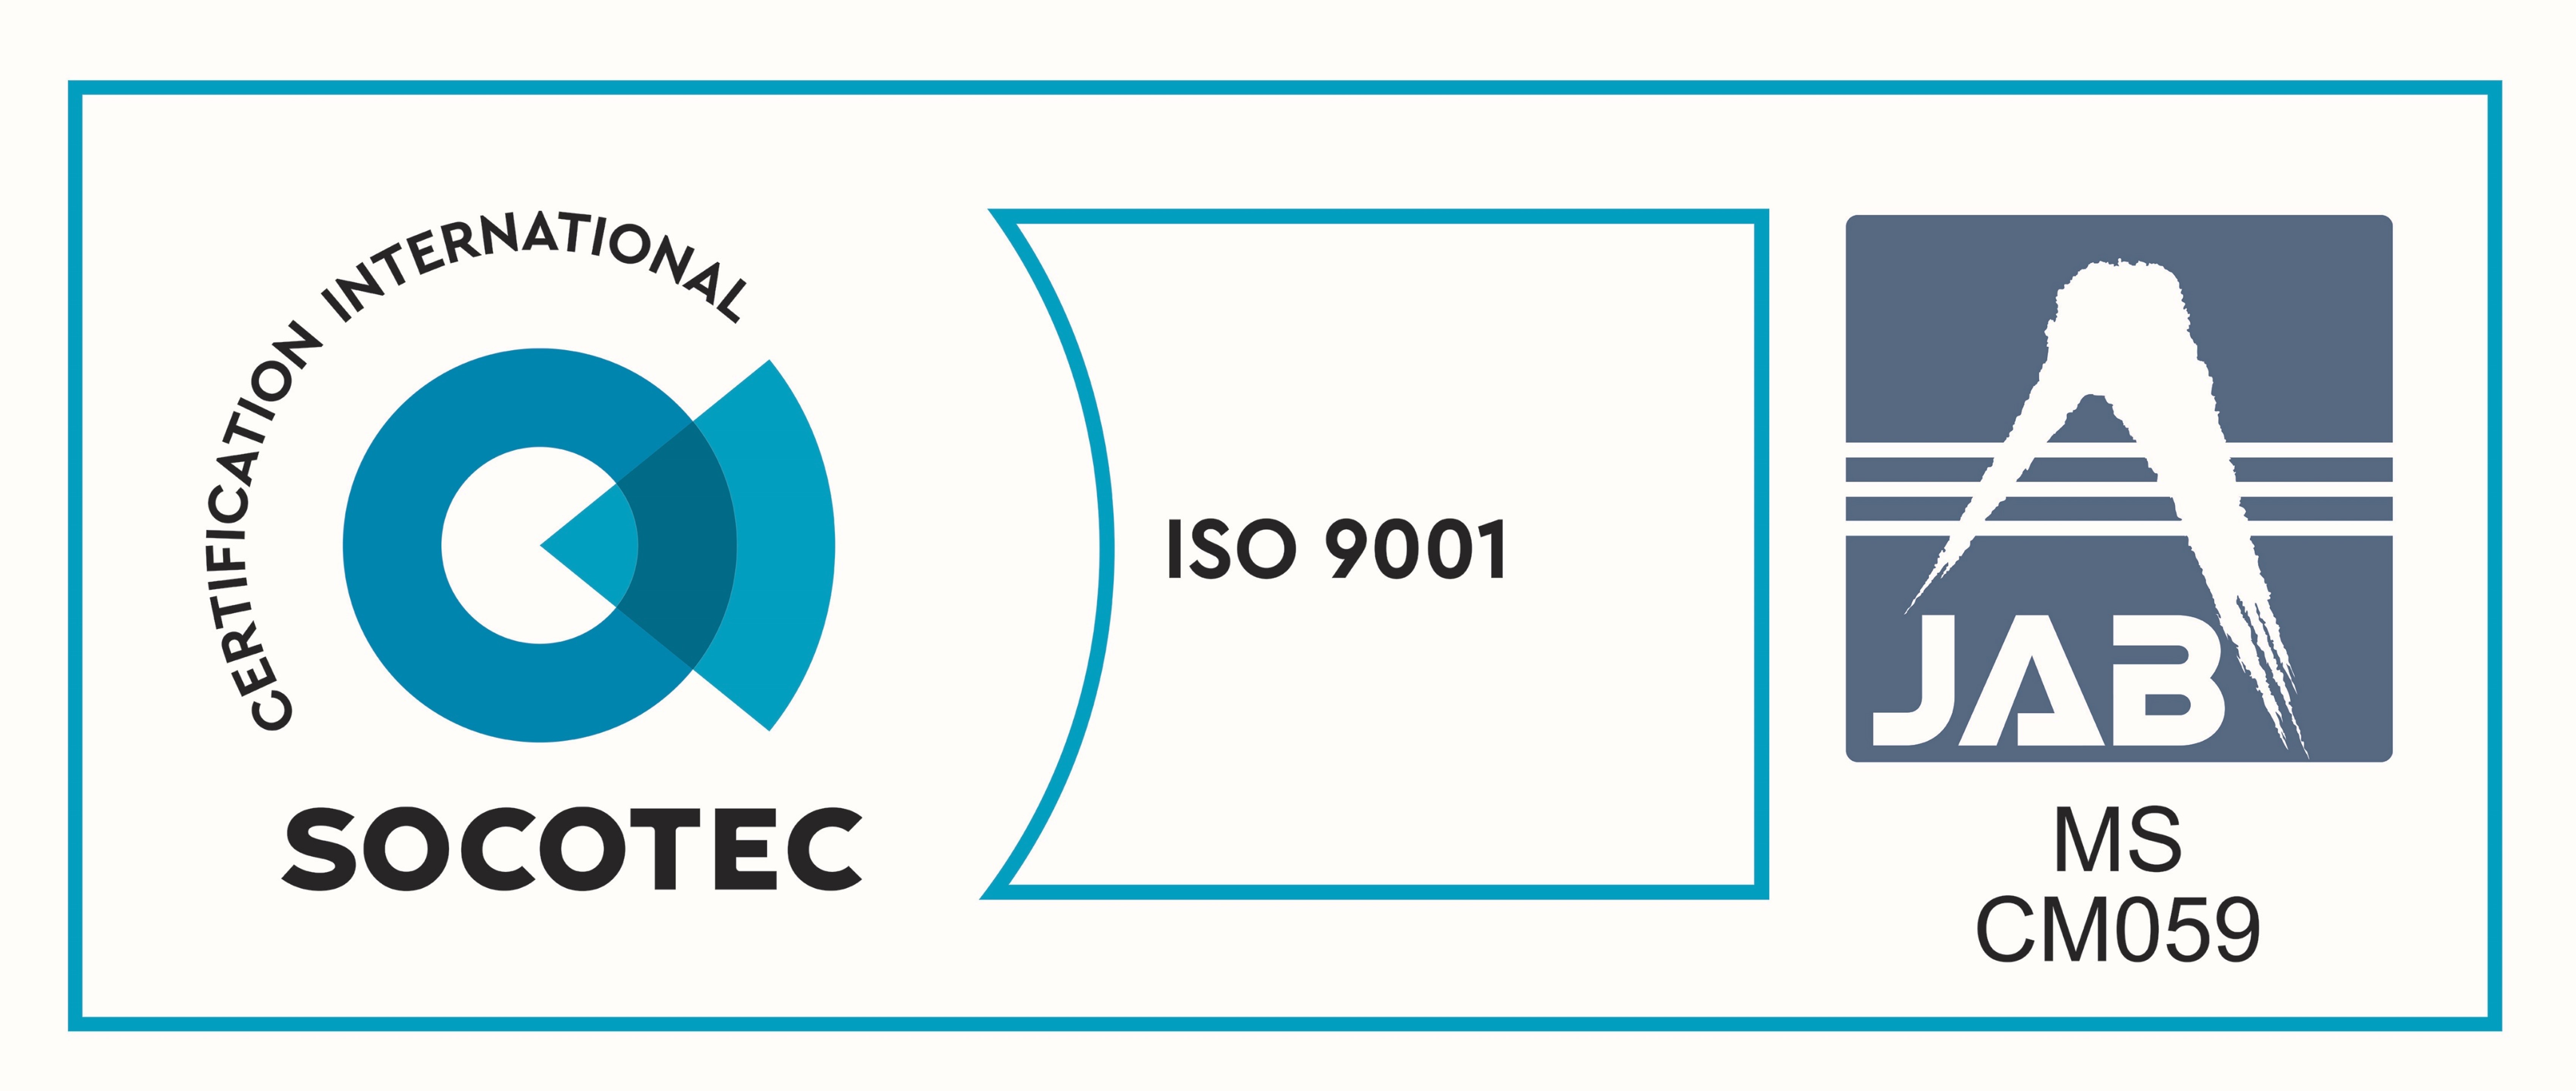 SOCOTEC CERTIFICATION INTERNATIONAL ISO 9001 UKAS MANAGEMENT SYSTEMS 0063